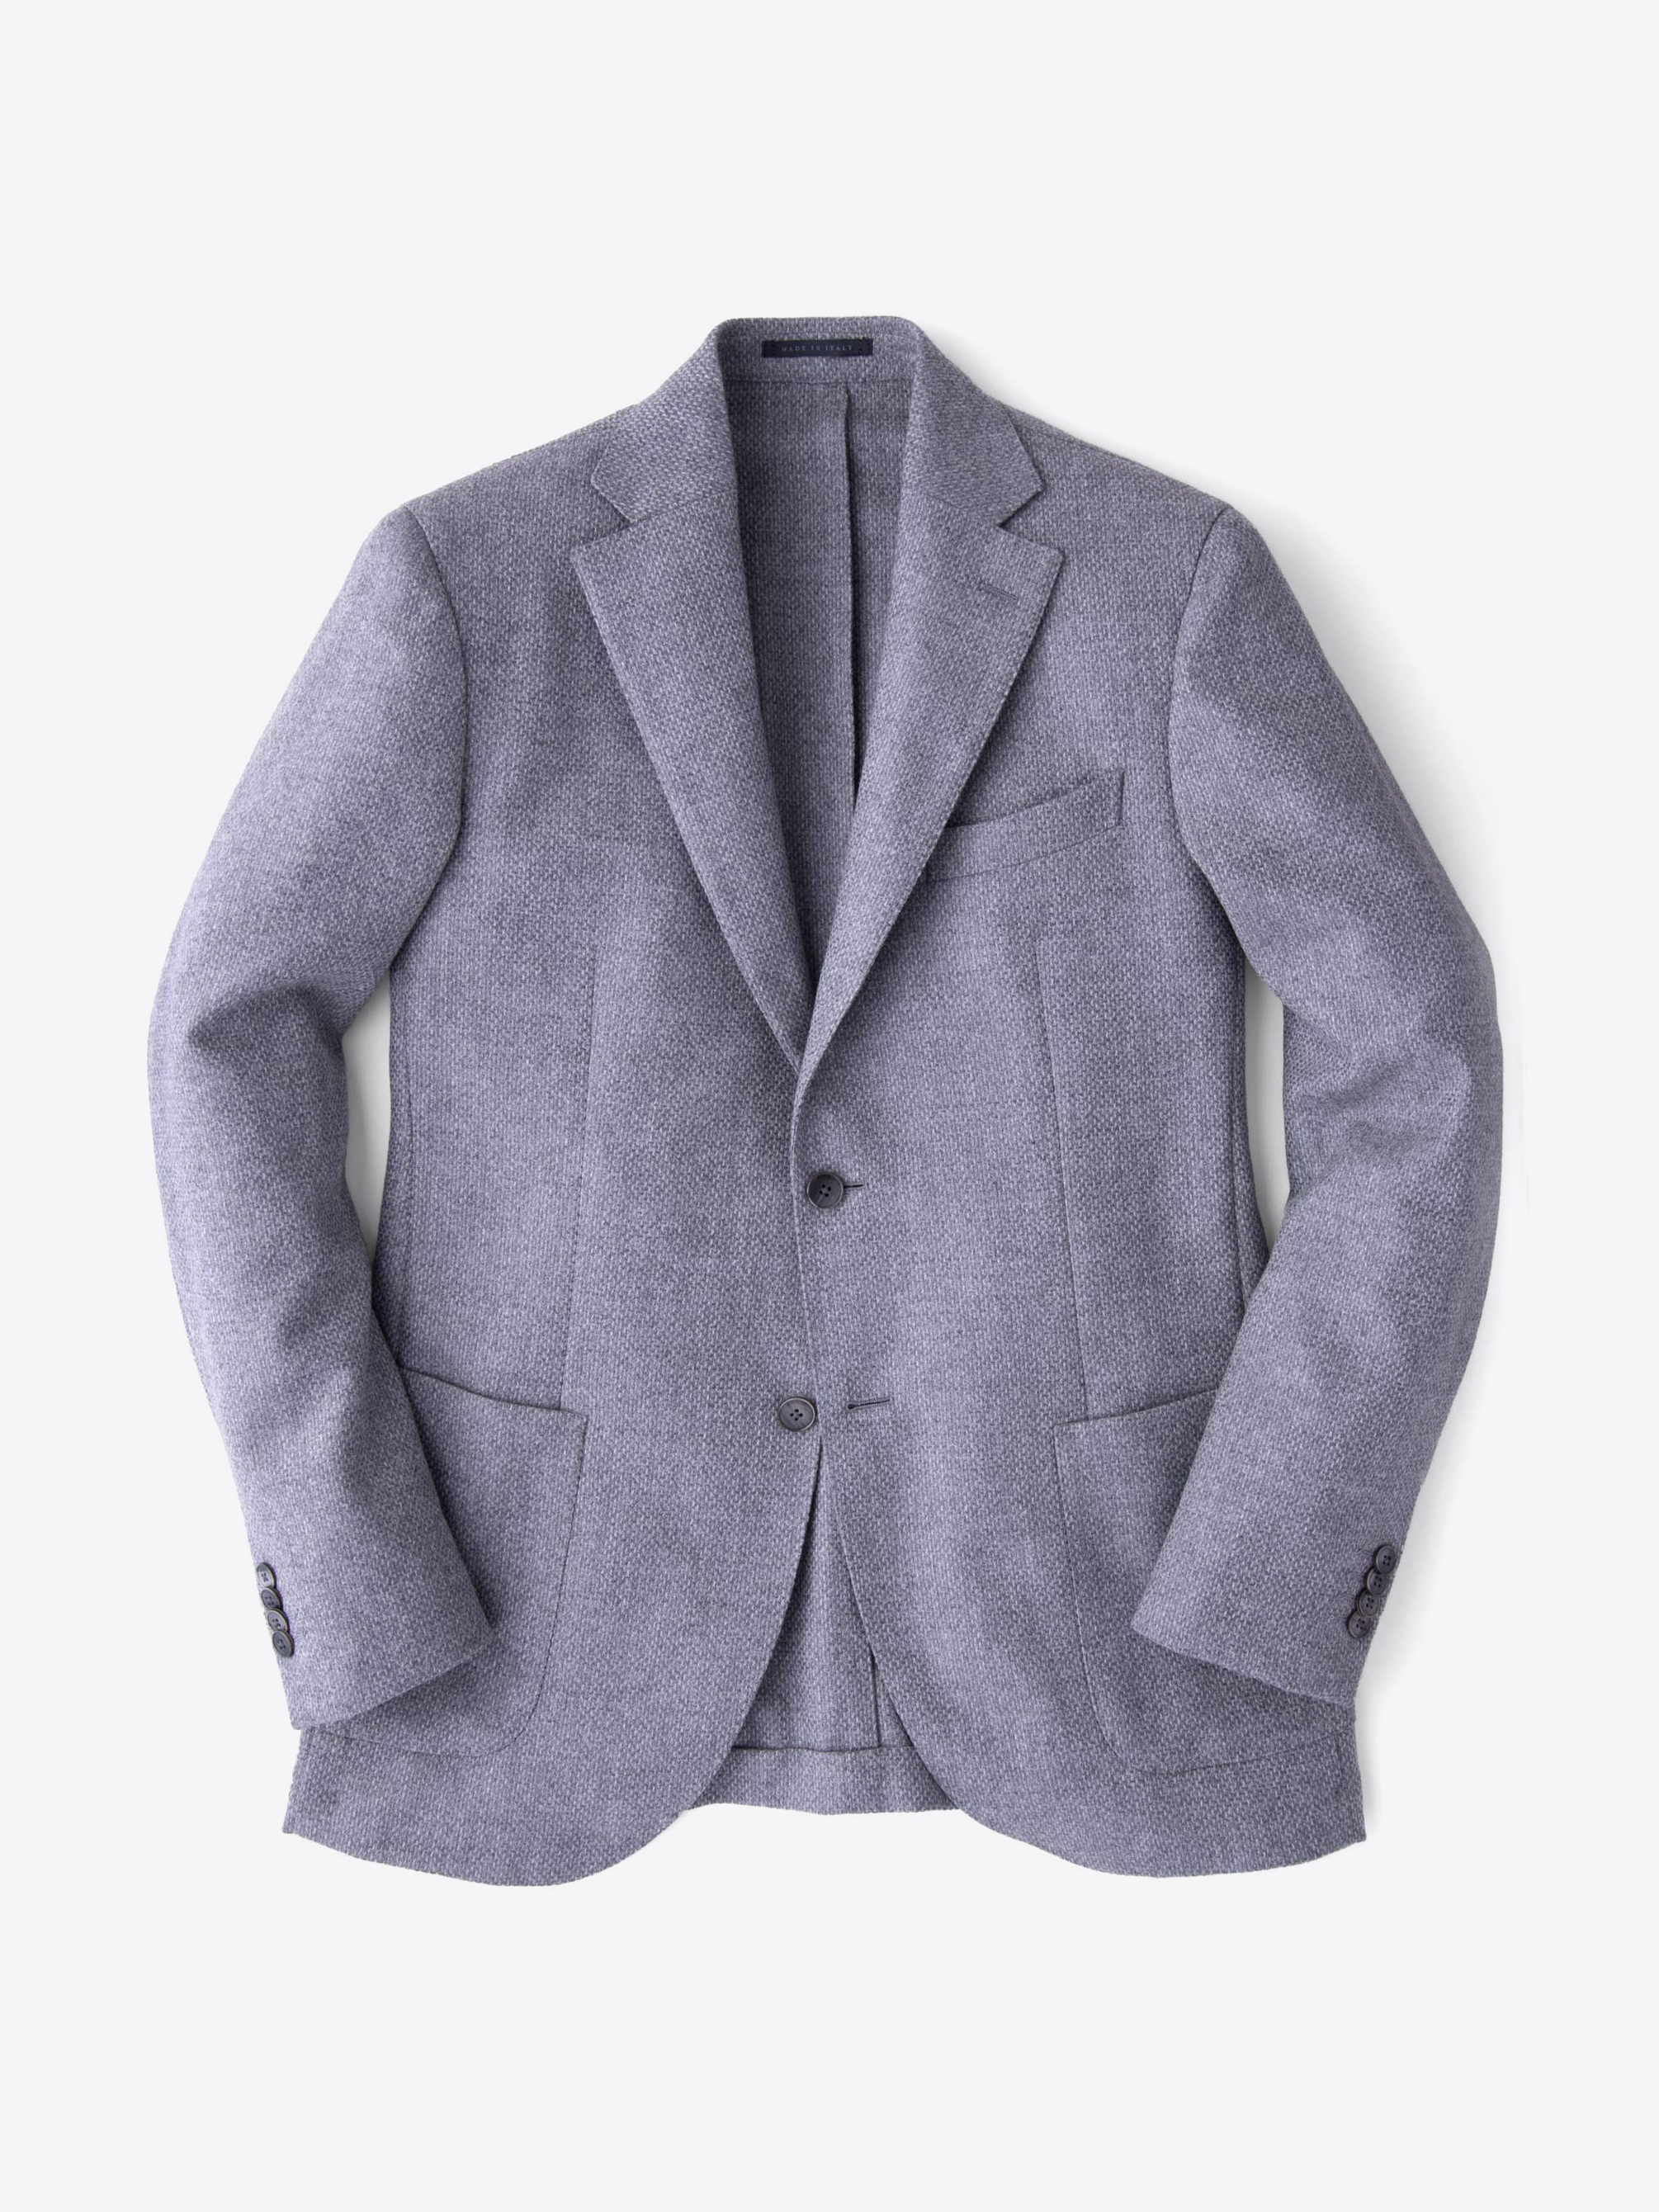 Zoom Image of Genova Grey Wool Cashmere Basketweave Jacket